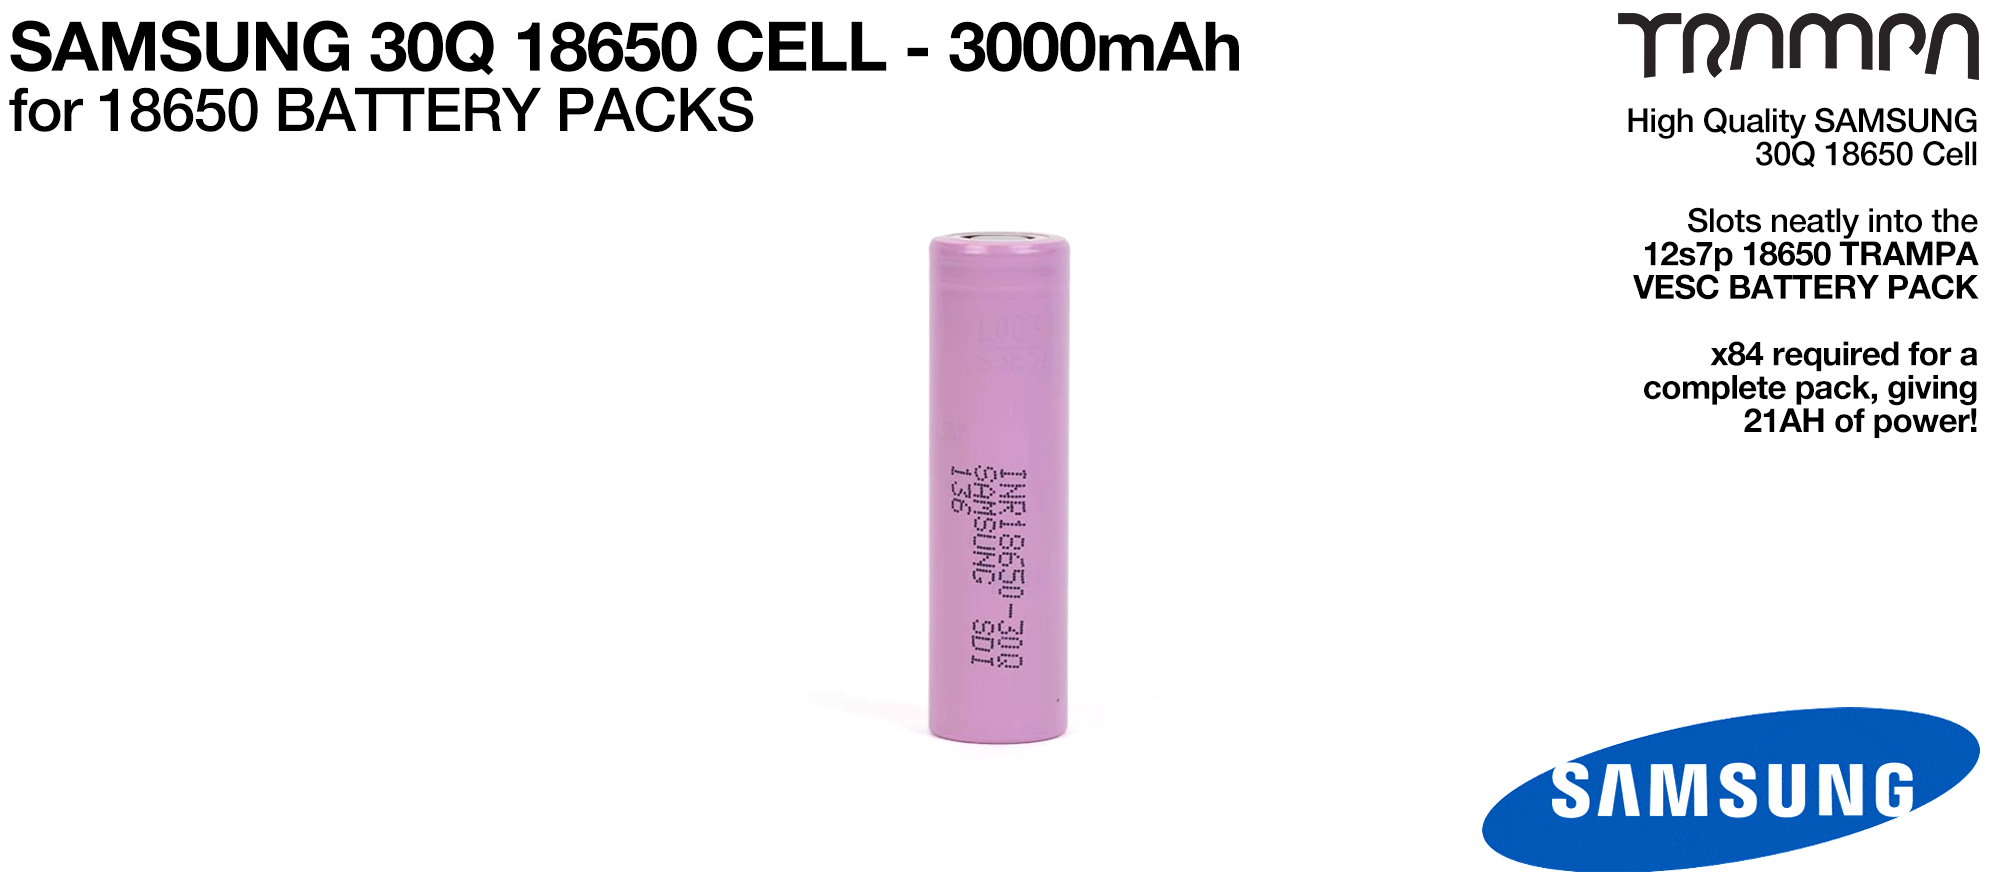 Please supply & install 84x Samsung 30Q 3000 mAh Cells 